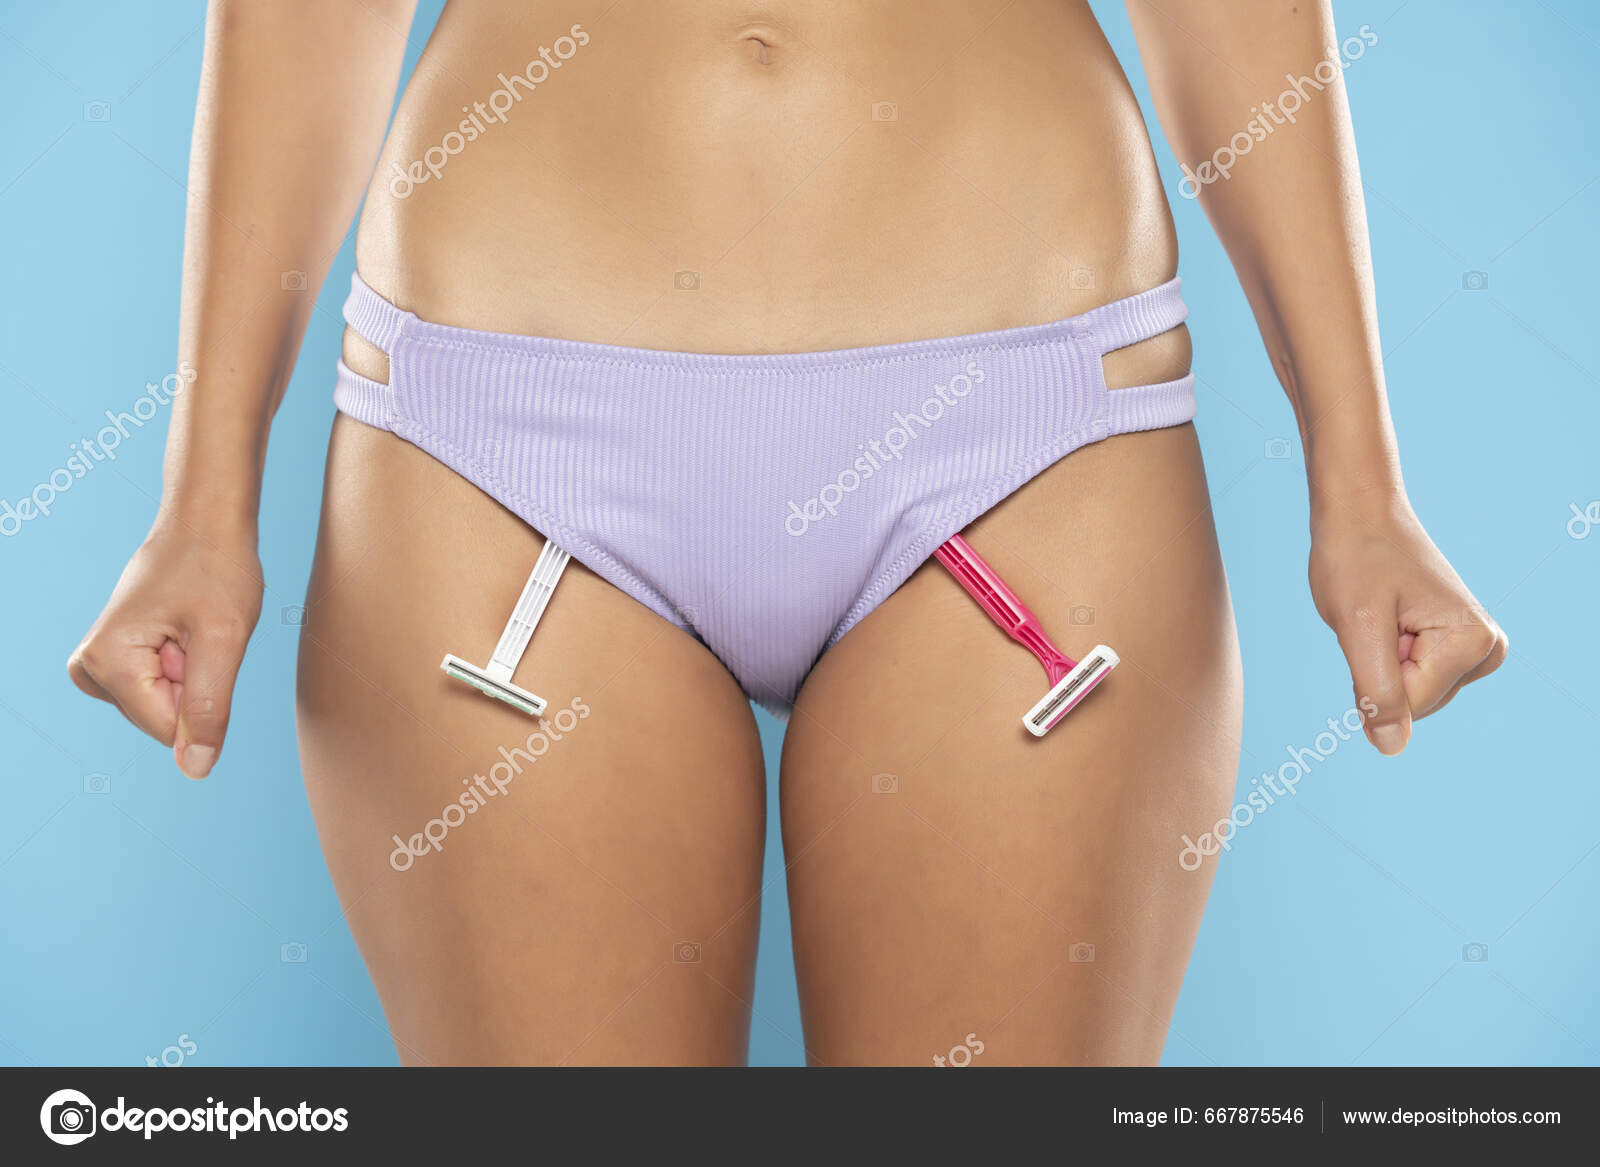 https://st5.depositphotos.com/1912333/66787/i/1600/depositphotos_667875546-stock-photo-shaving-blades-panties-girl-health.jpg